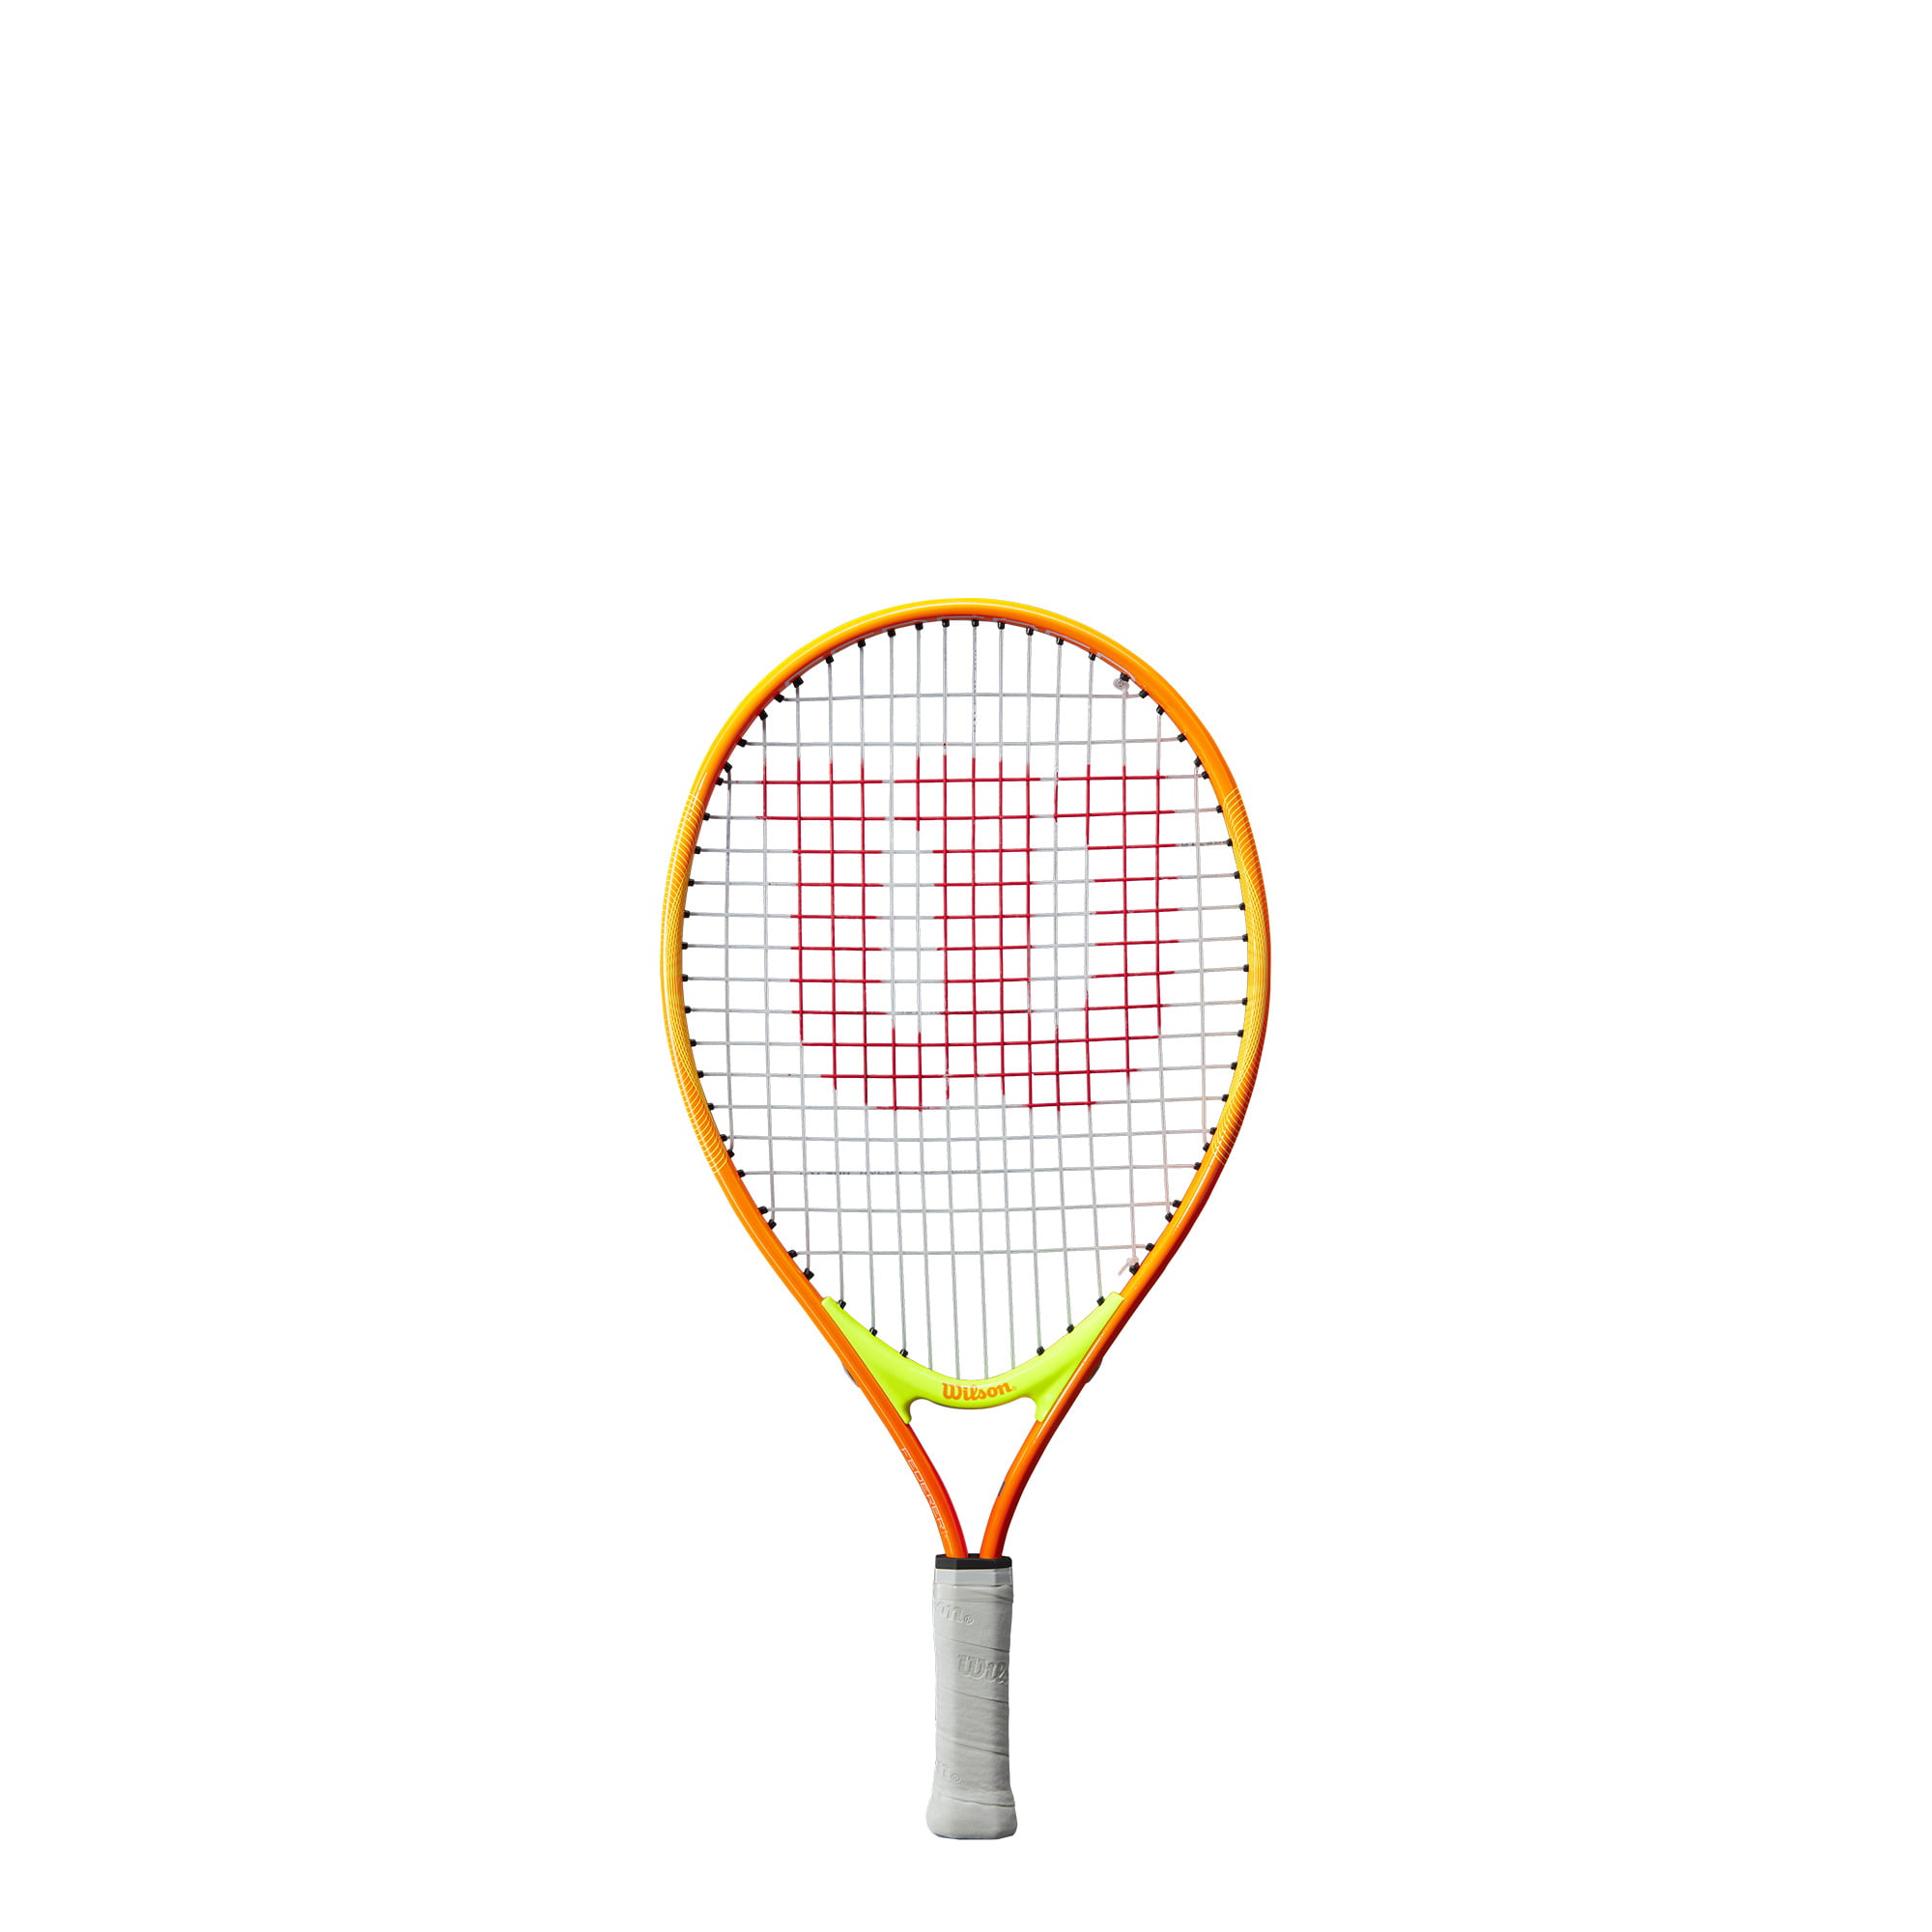 Details about   Durable PU Sweatband Cushion Wrap Grip Tape 27m for Tennis Badminton Racquet 